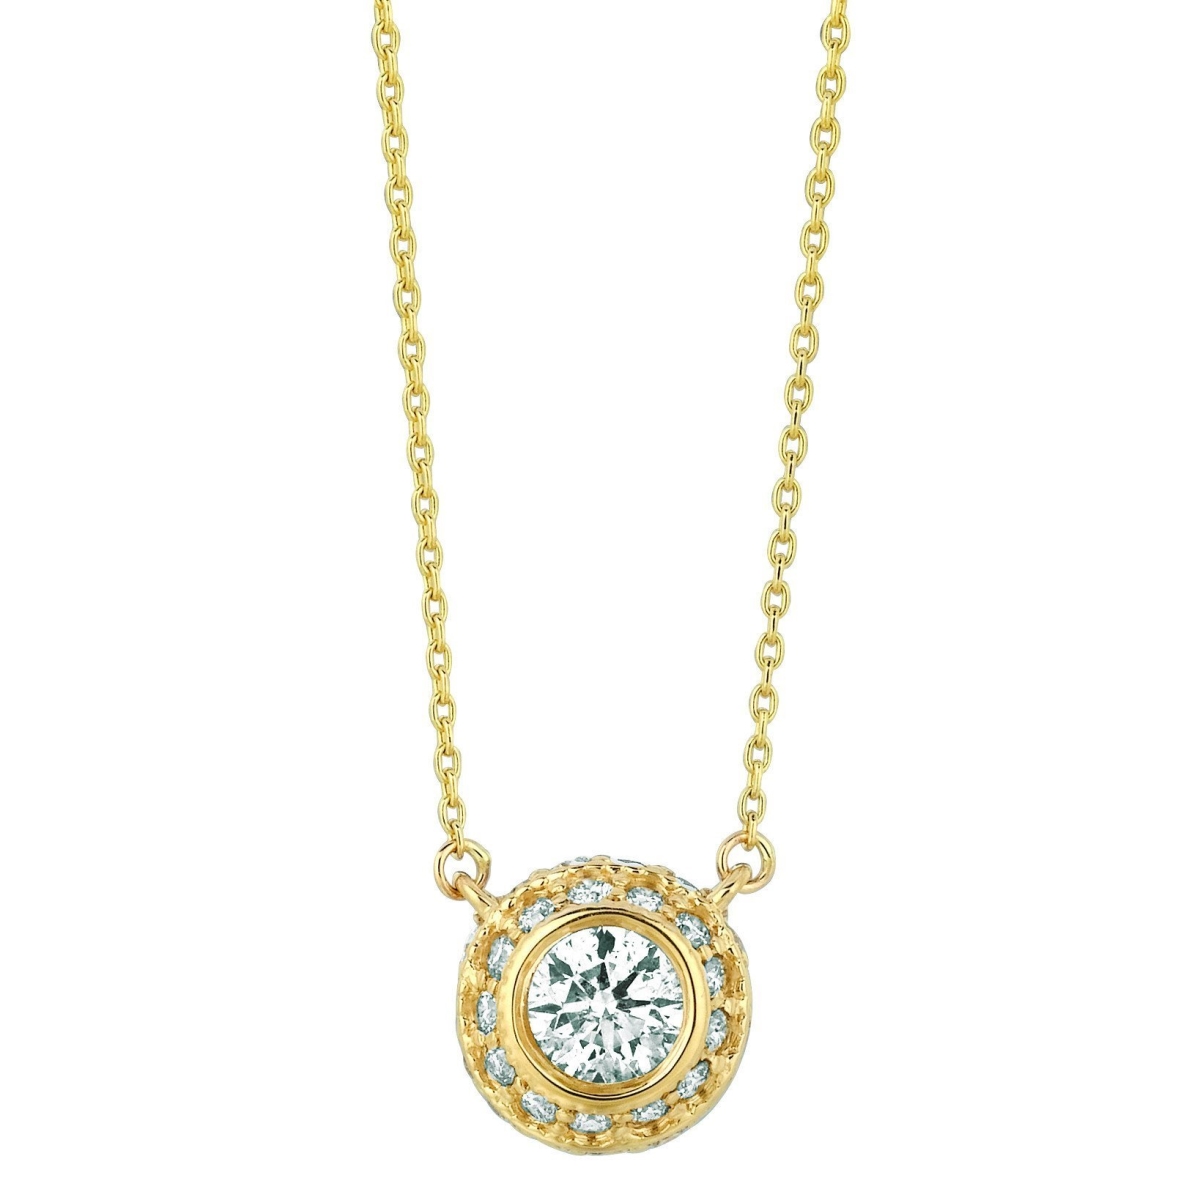 Picture of Harry Chad Enterprises 16322 1 CT Diamond Pendant Necklace - 14K Yellow